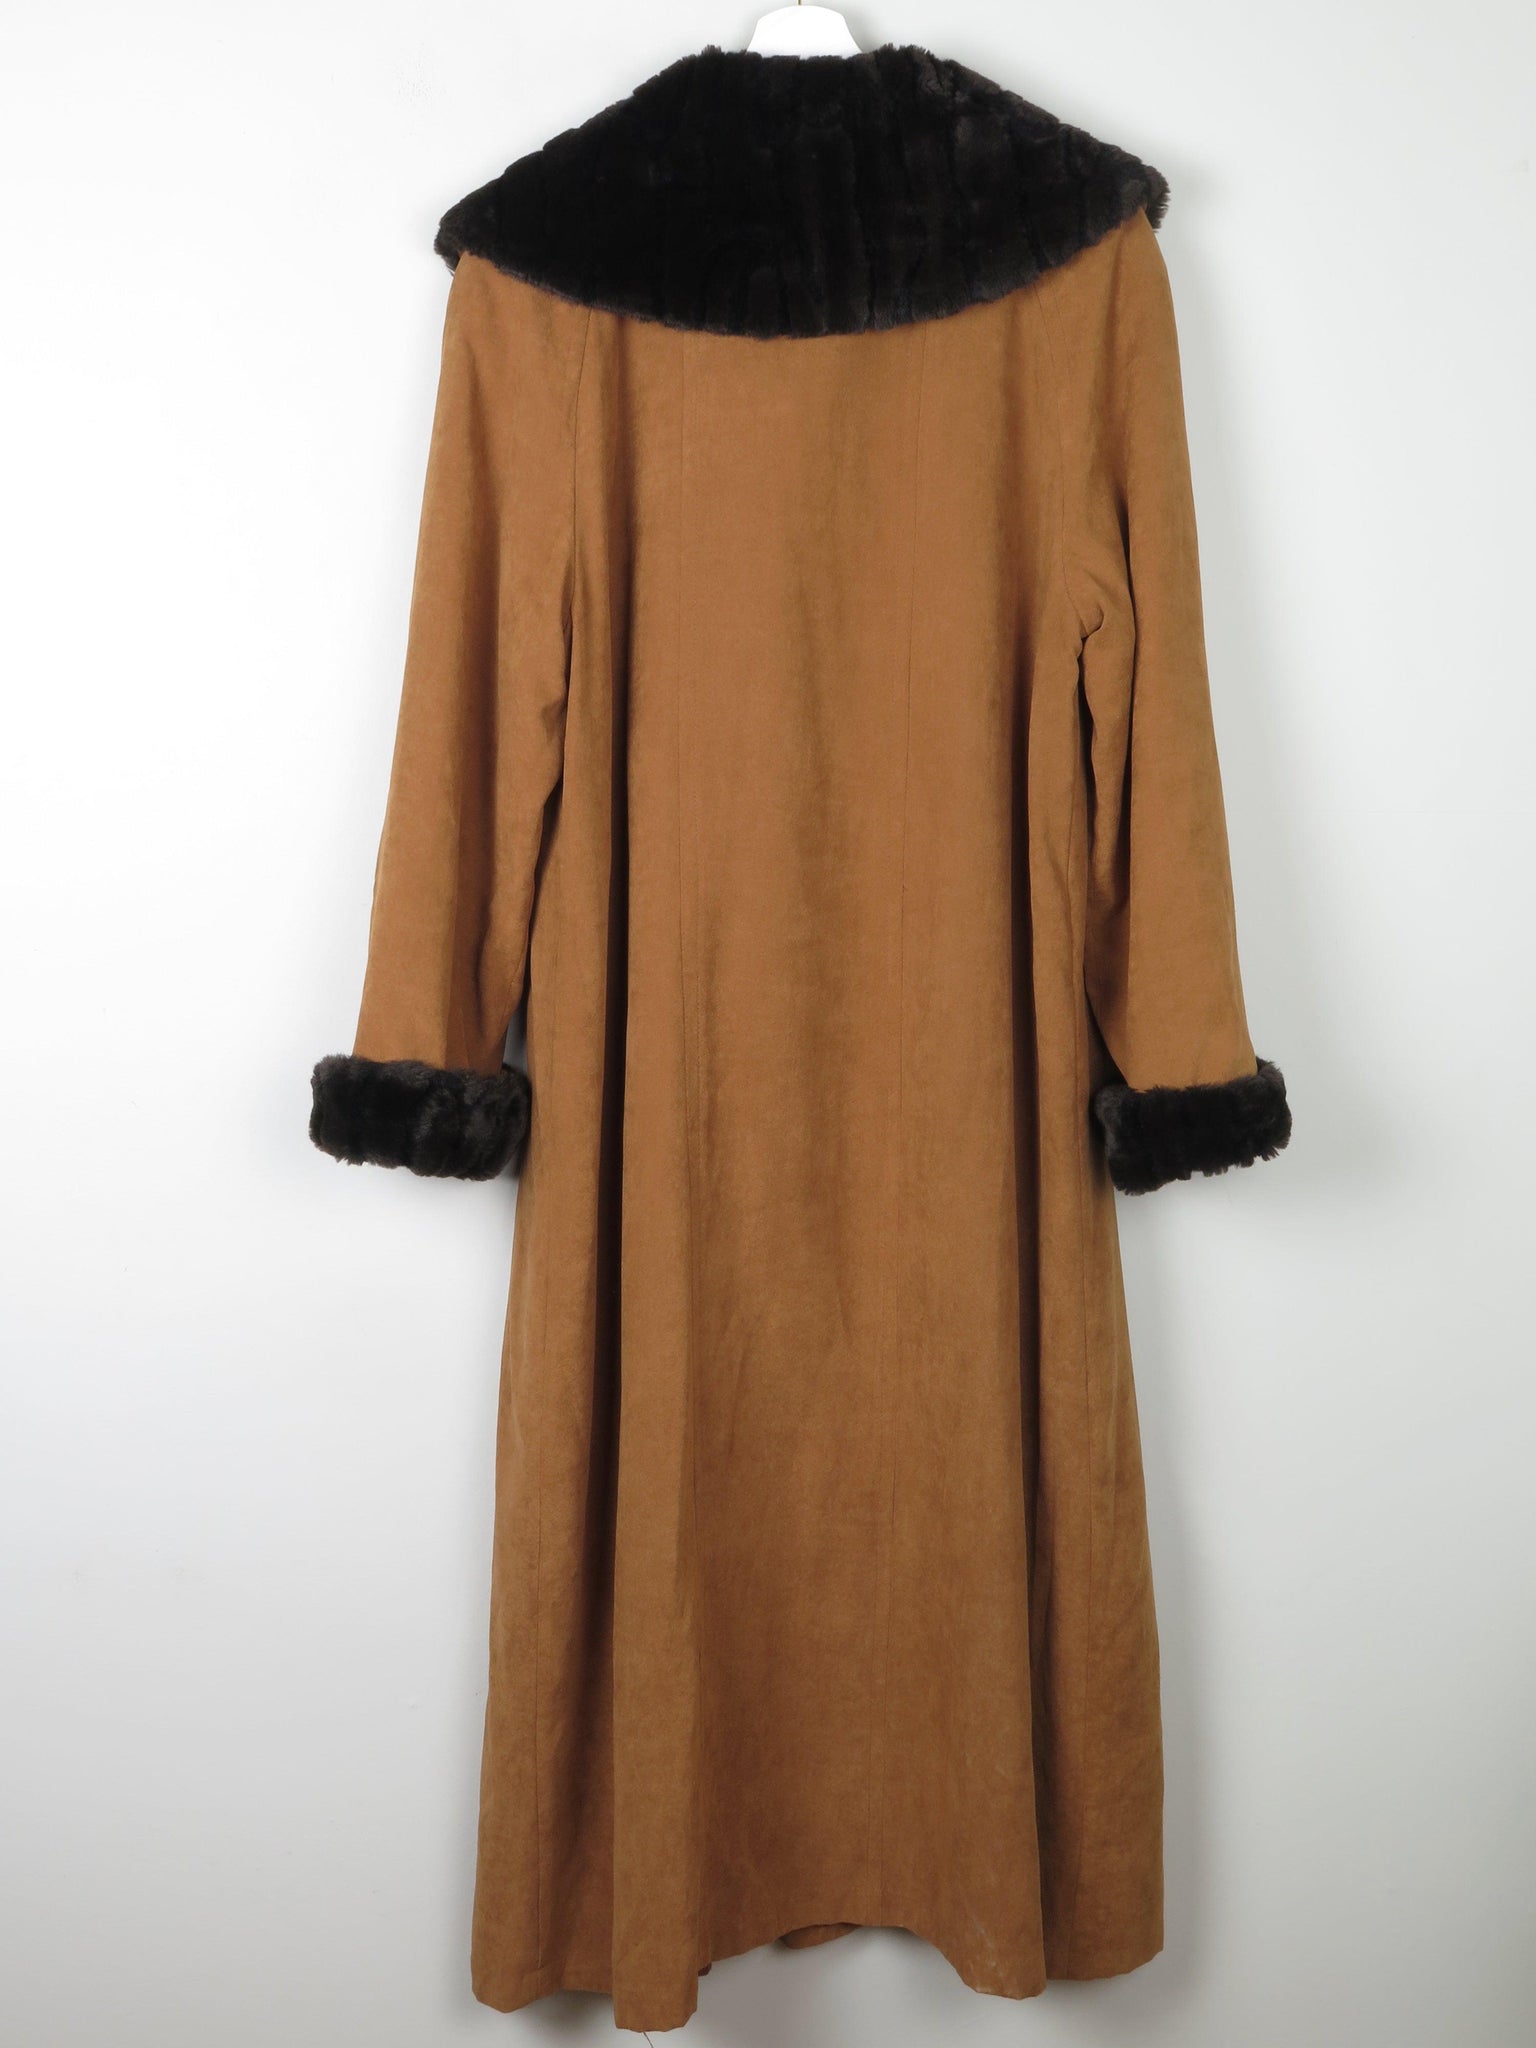 Women's Vintage Tan Maxi Coat With Brown Fur Trim M/L - The Harlequin